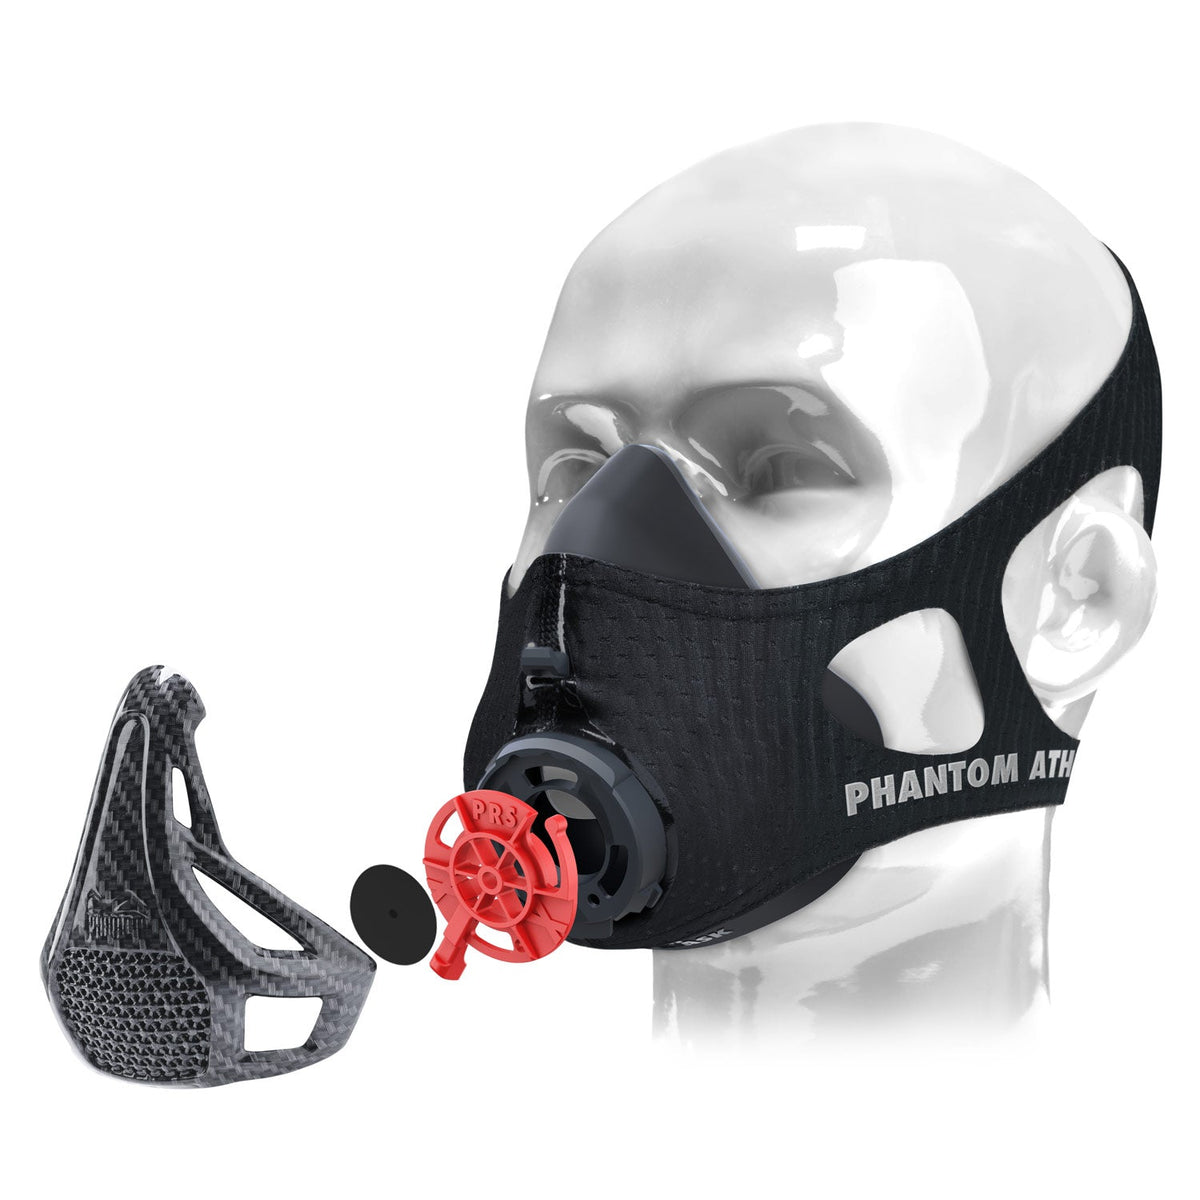 Phantom training mask - prs x-treme / carbon cover - PHANTOM ATHLETICS